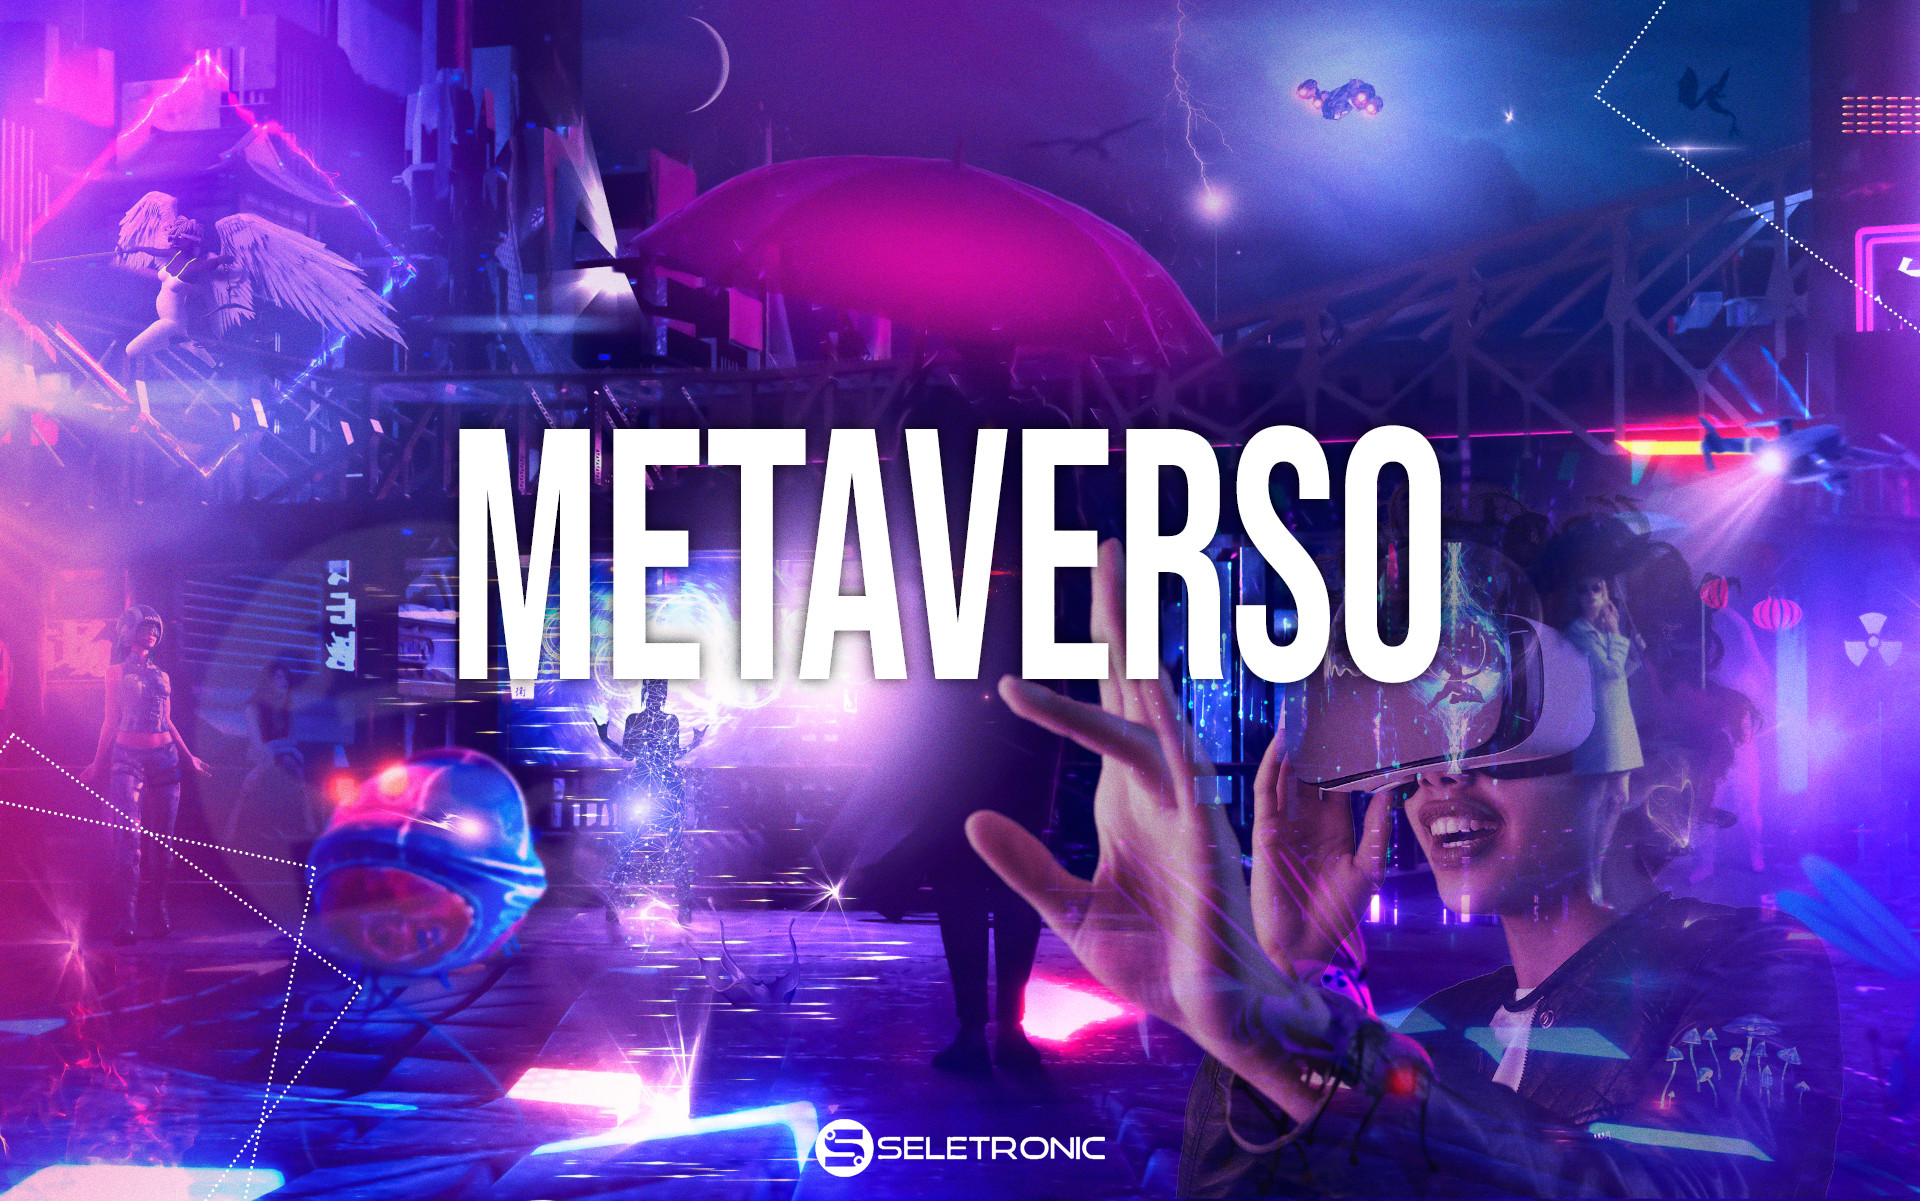 O que é o Metaverso?